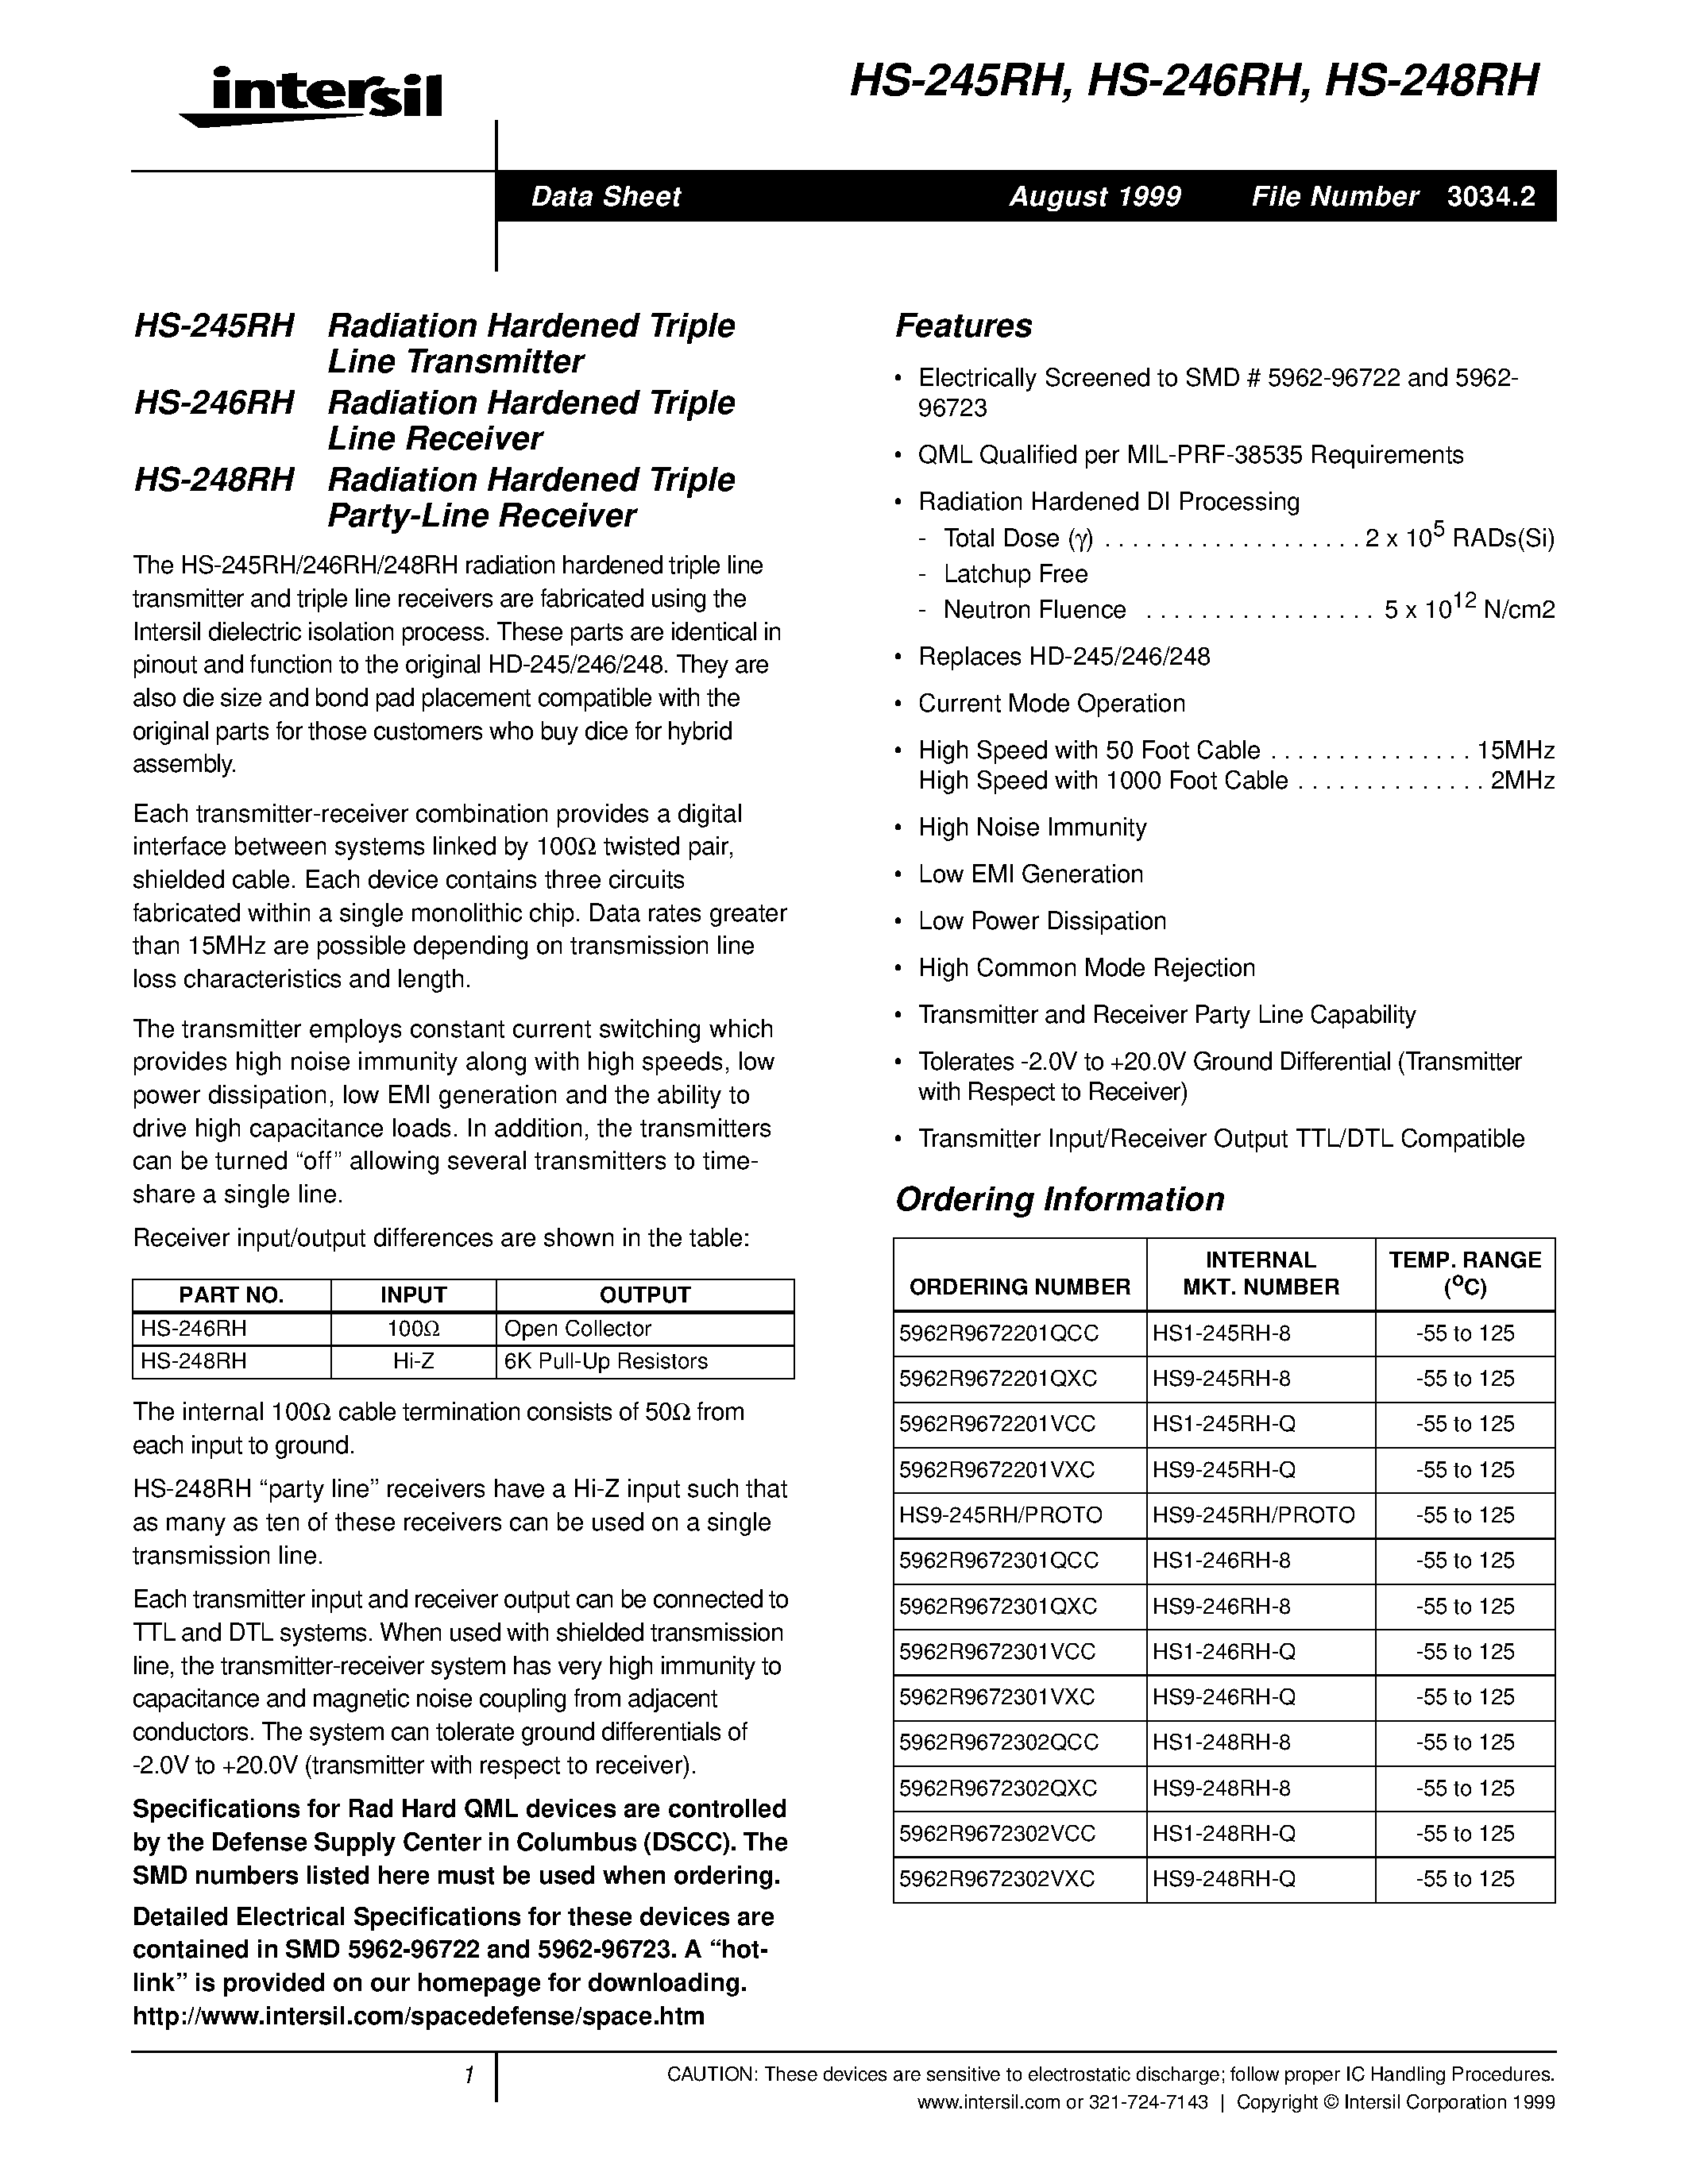 Даташит HS-248RH - Radiation Hardened Triple Line(party-Line) Transmitter страница 1